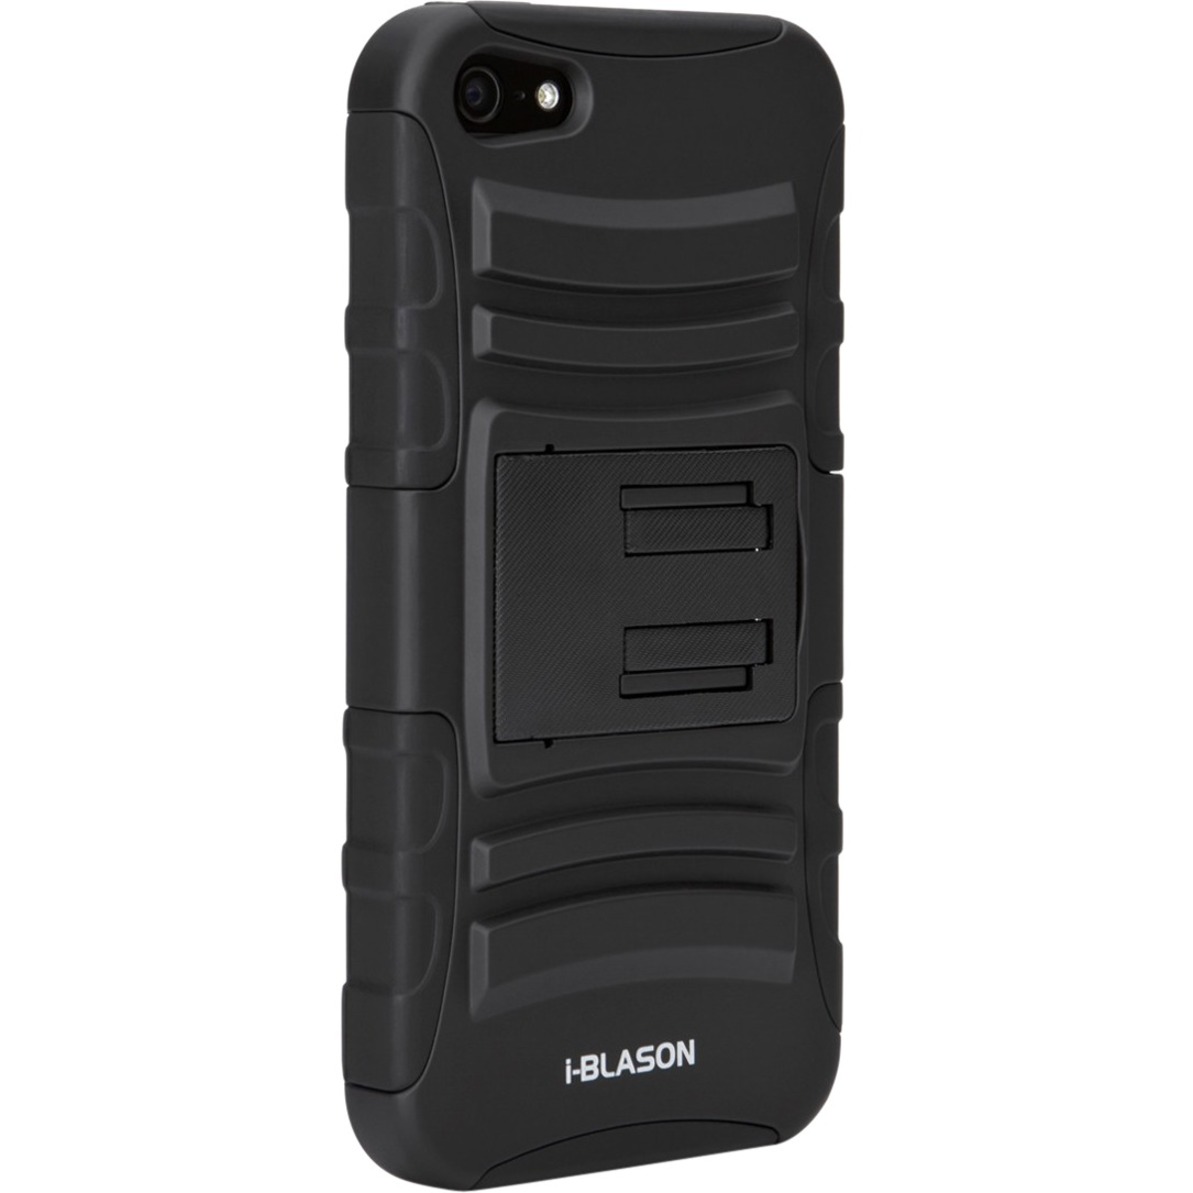 i-Blason Prime Carrying Case (Holster) Apple iPhone 5c Smartphone, Black - image 3 of 4